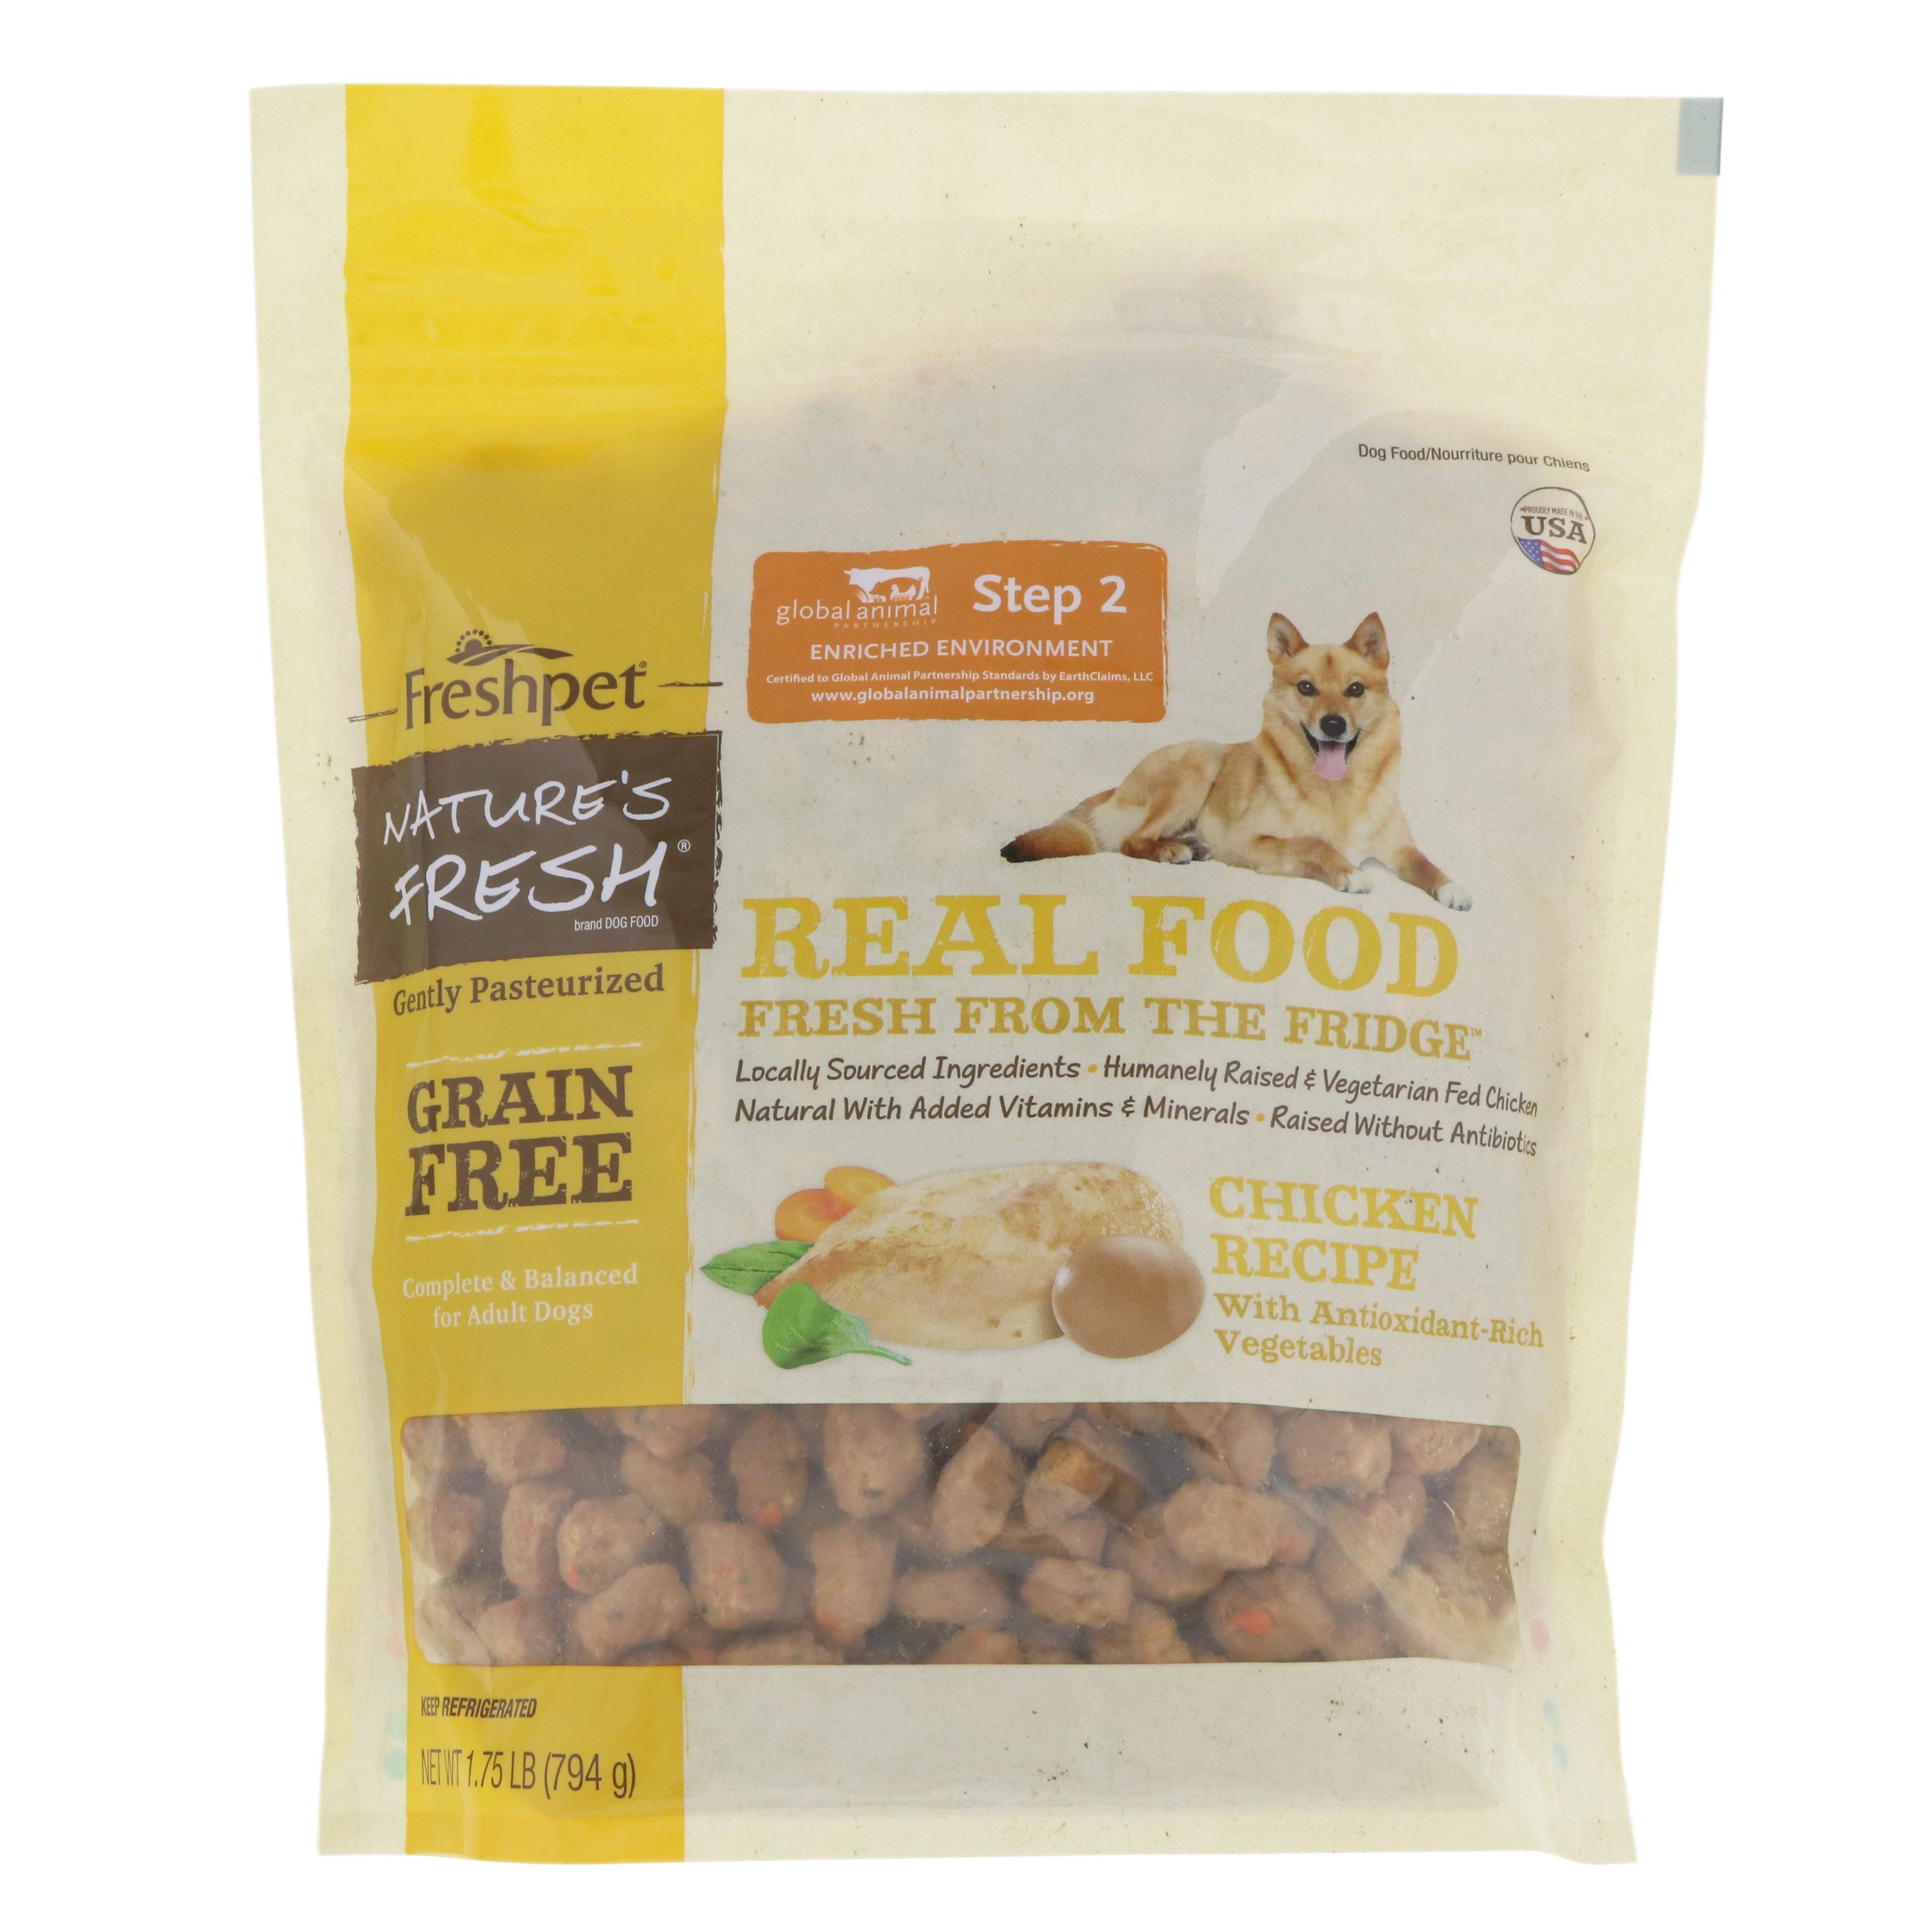 Freshpet Nature's Fresh Dog Food, Chicken Recipe, Adult - 1.75 lb